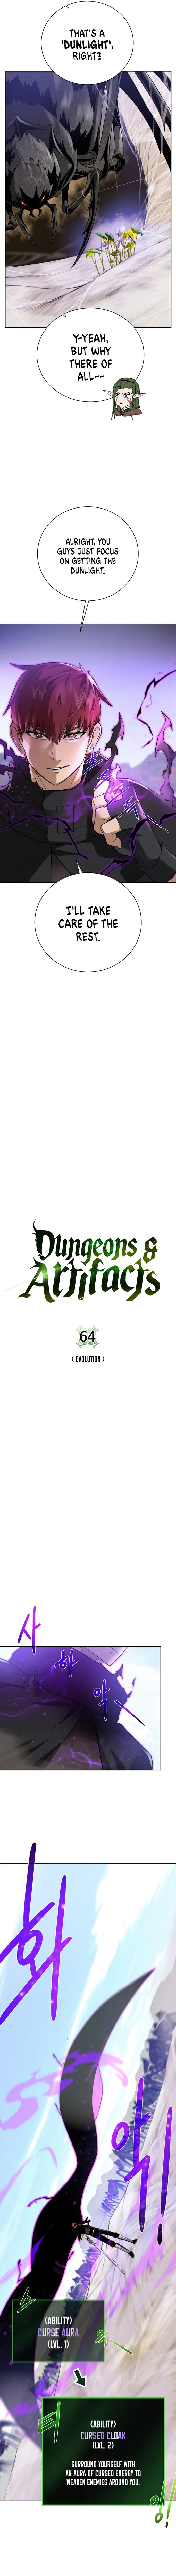 dungeons-artifacts-chap-64-2